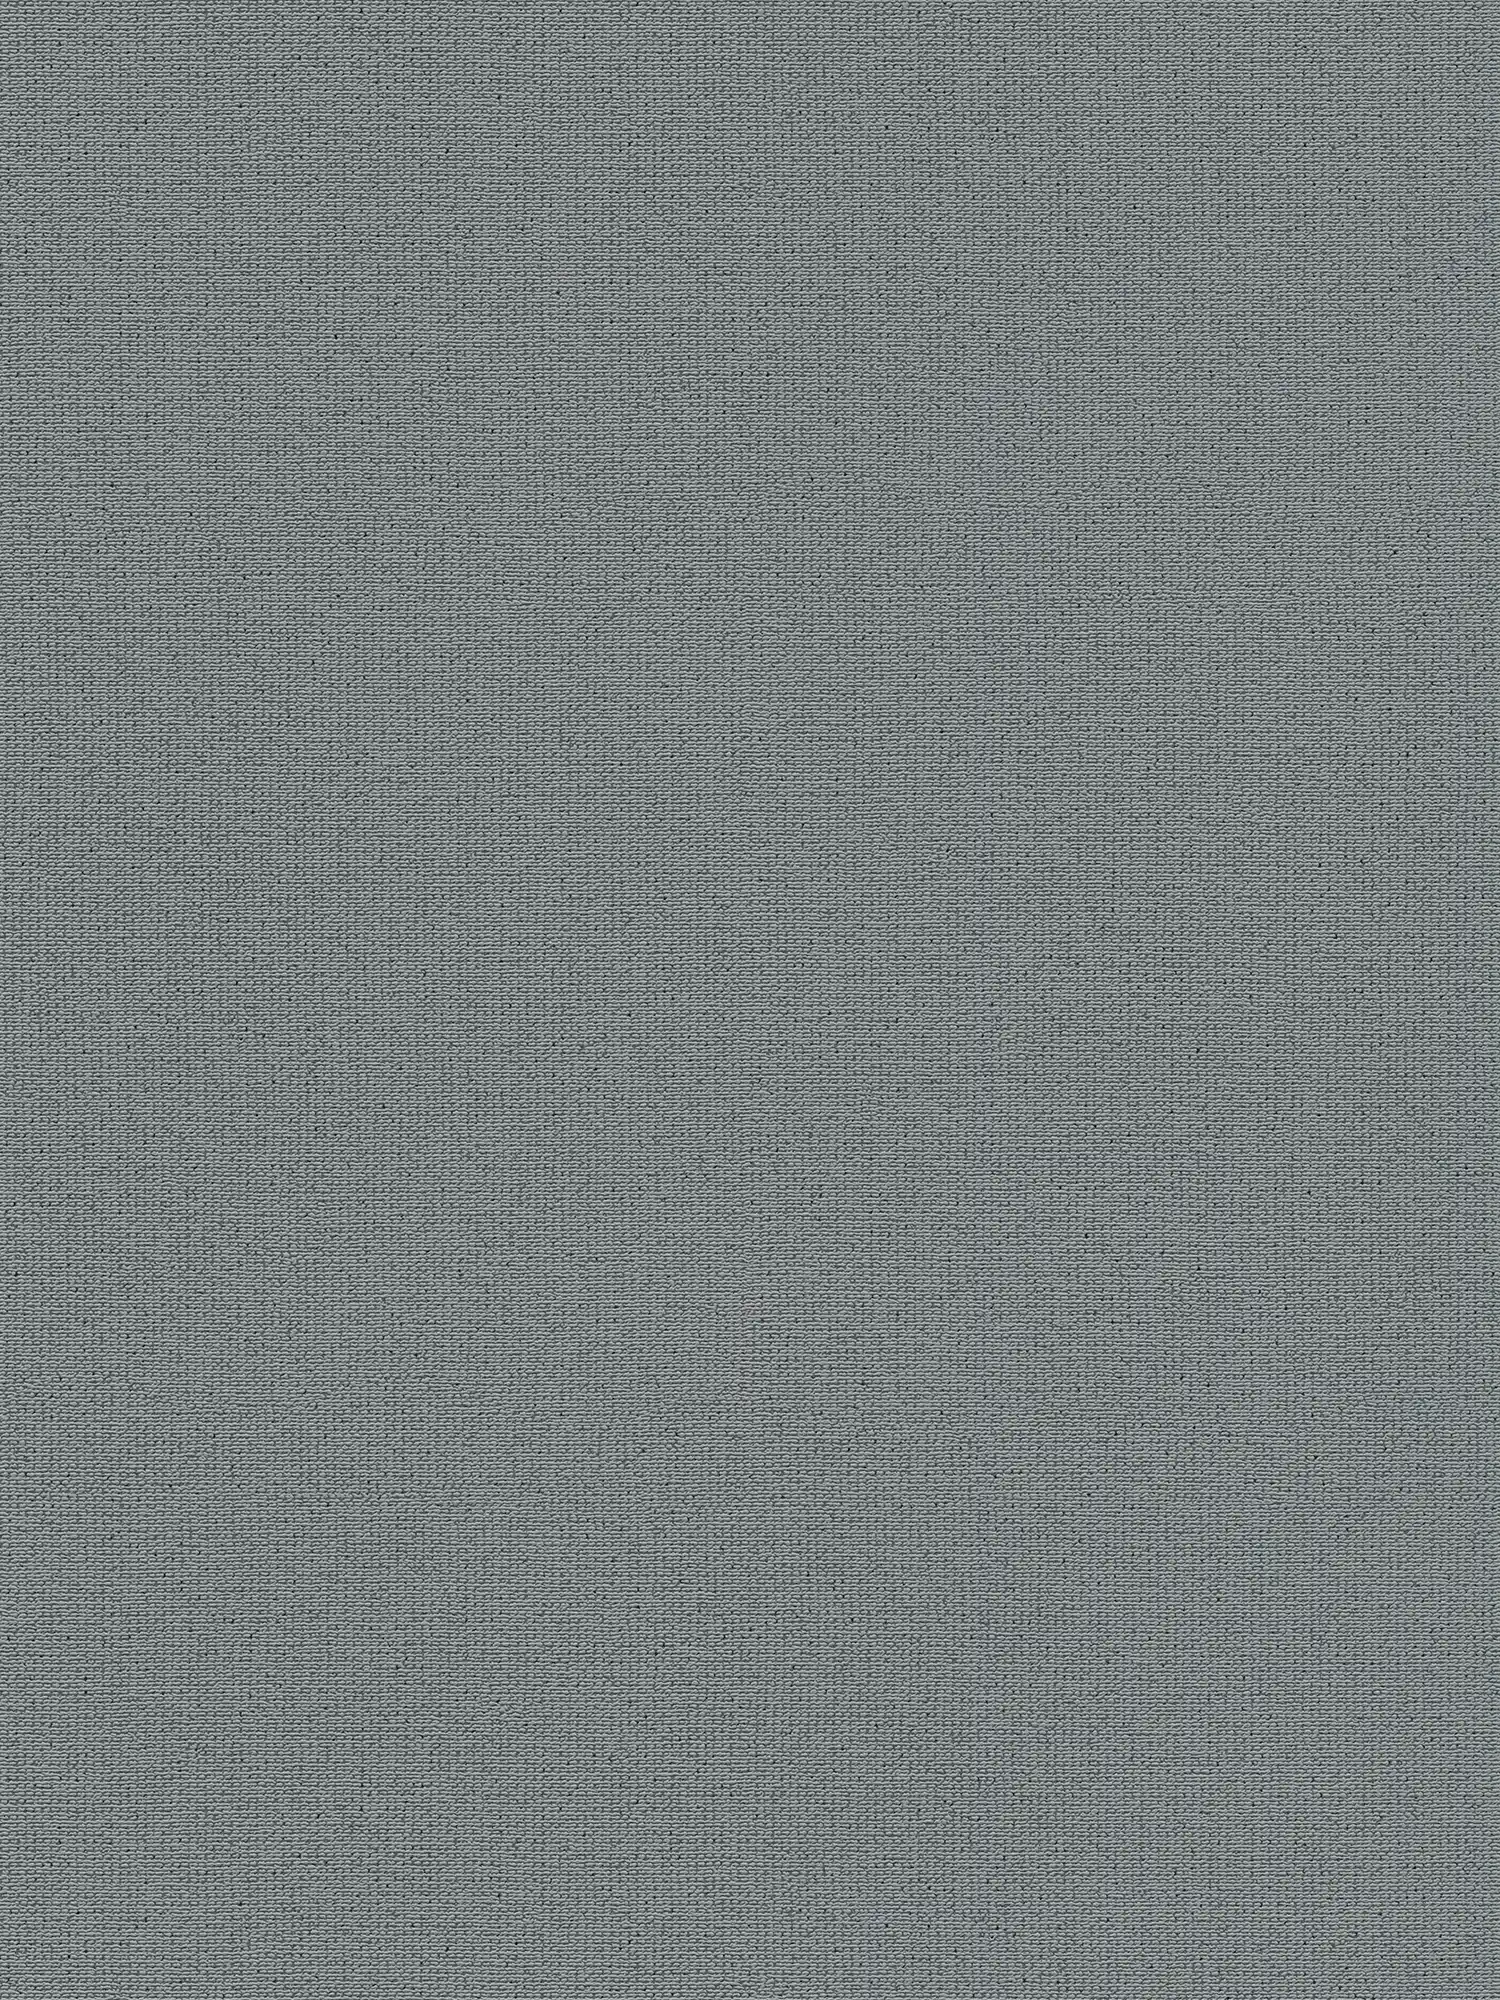 Plain Scandi wallpaper in matt and linen structure - dark grey
